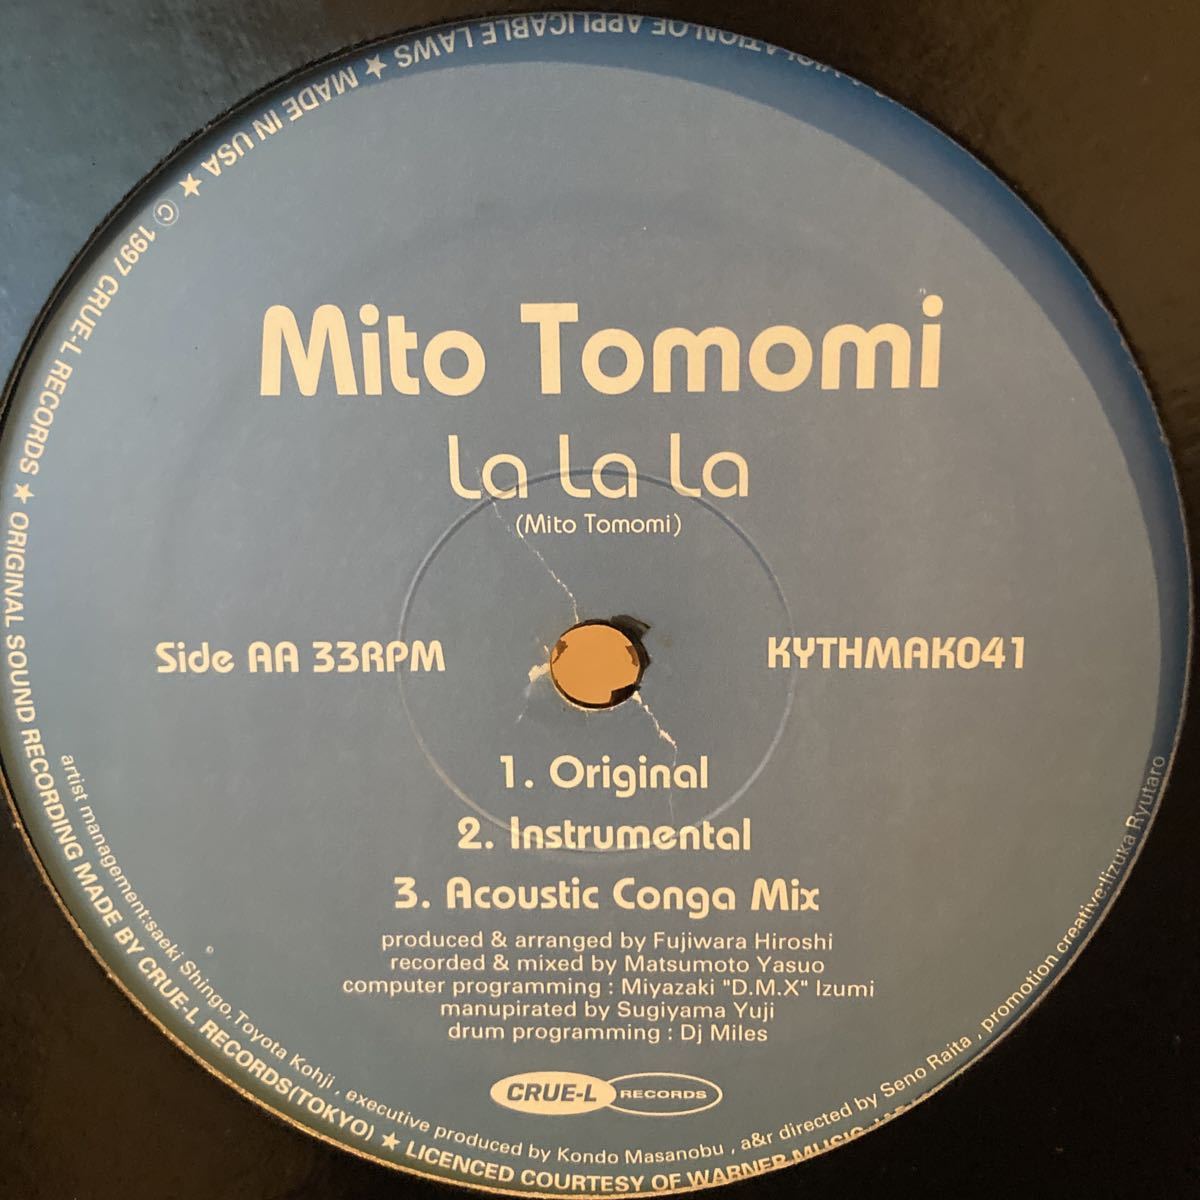 [\'98 Crue-L Records, Fujiwara hirosi produce ]Mito Tomomi Futari / La La La 12 -inch 